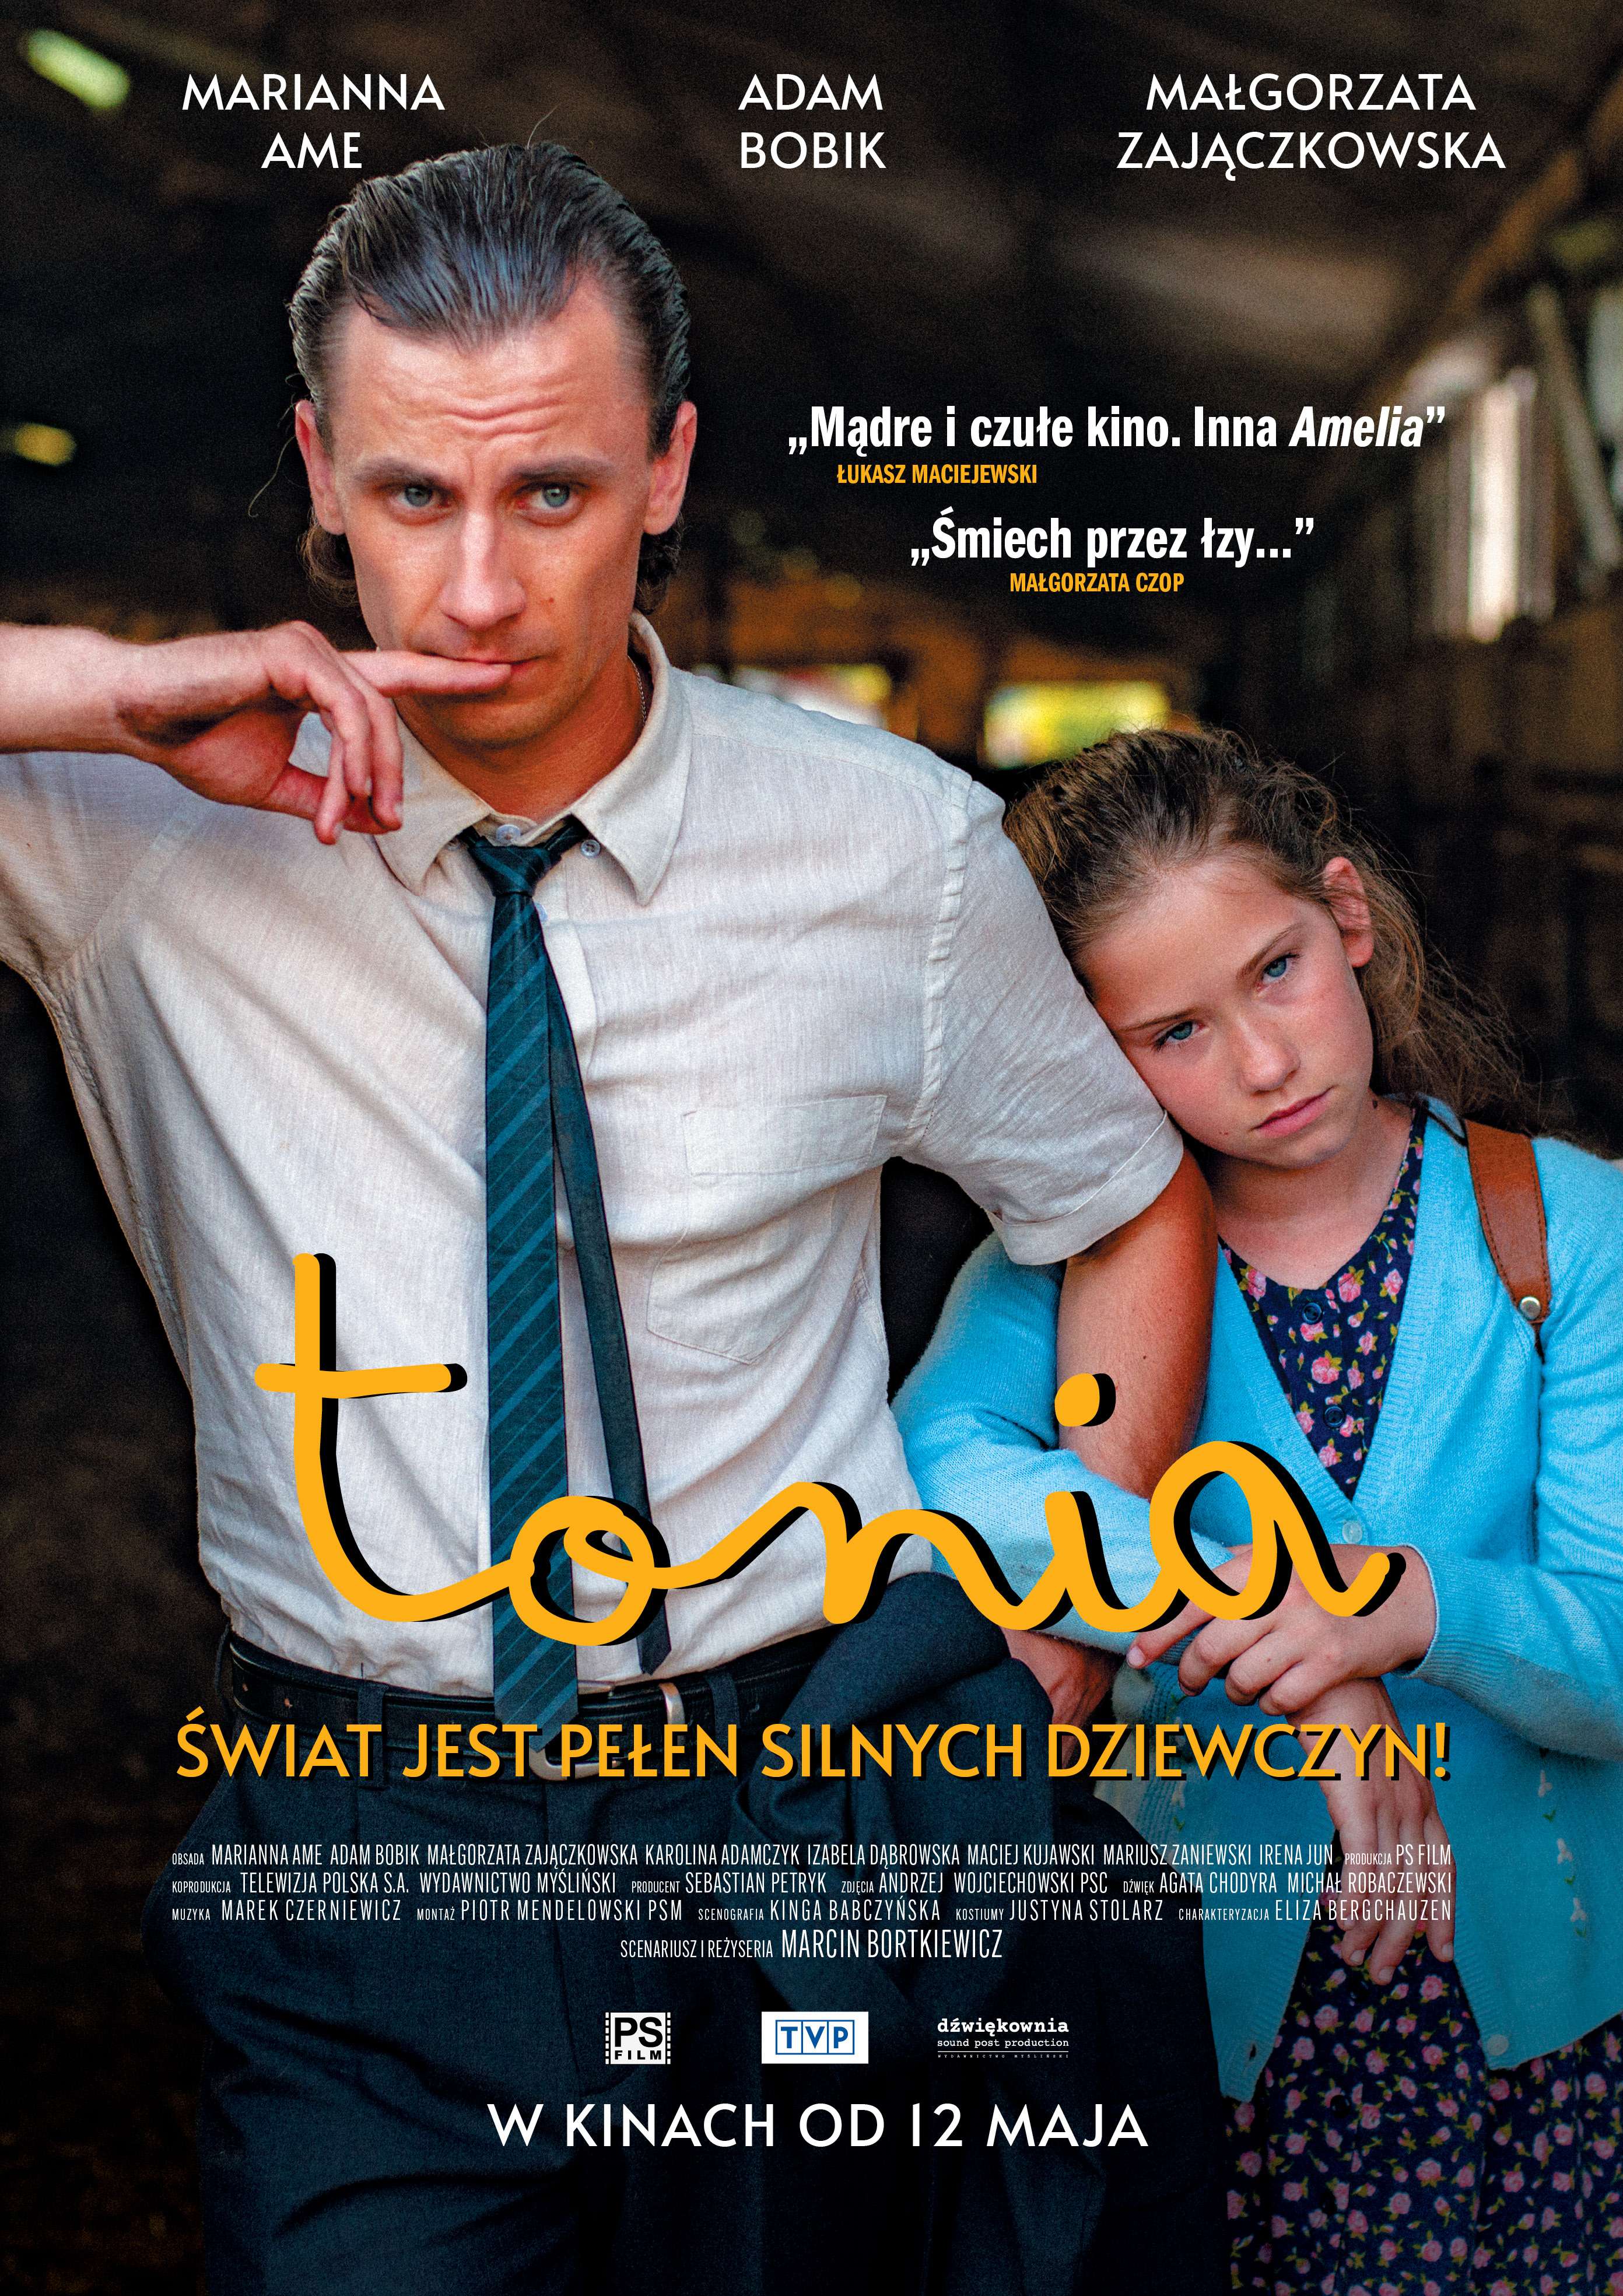 Tuesday cinema for adults: "Tonia"